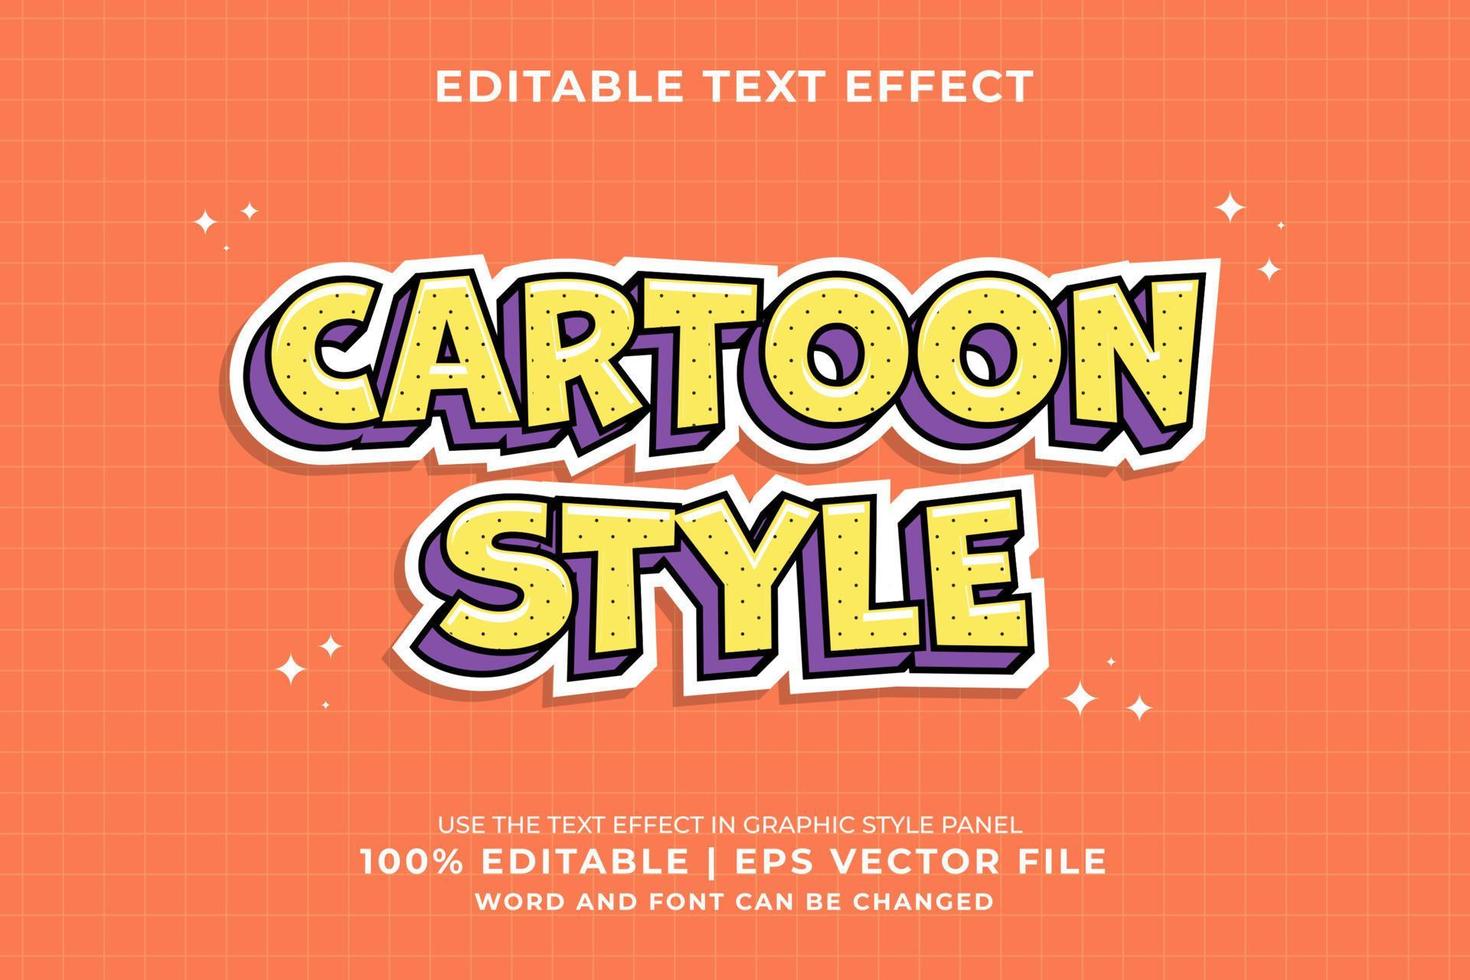 Editable text effect - Cartoon template style premium vector